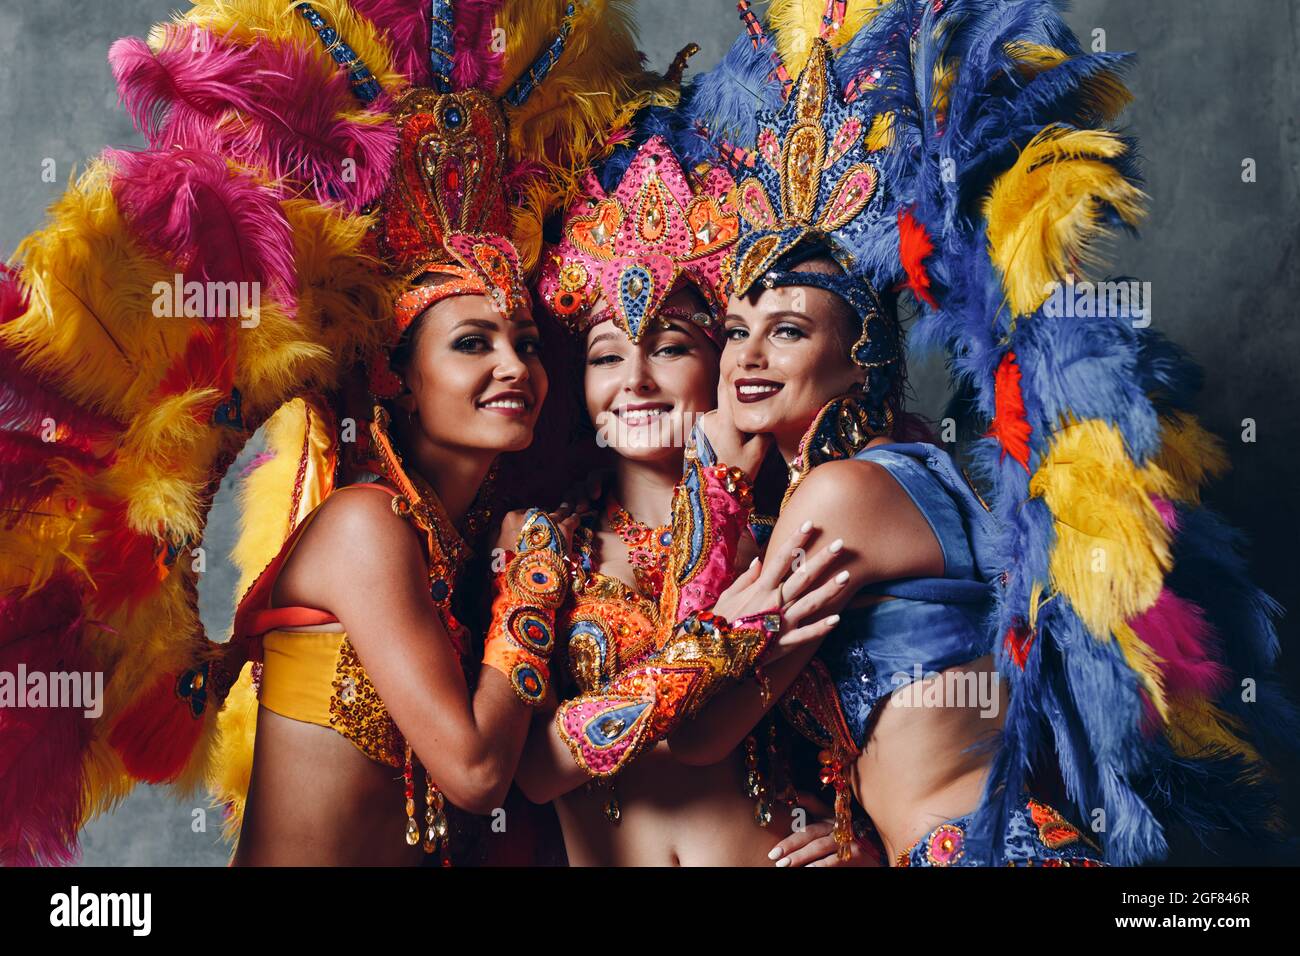 Plumas de carnaval fotografías e imágenes de alta resolución - Alamy